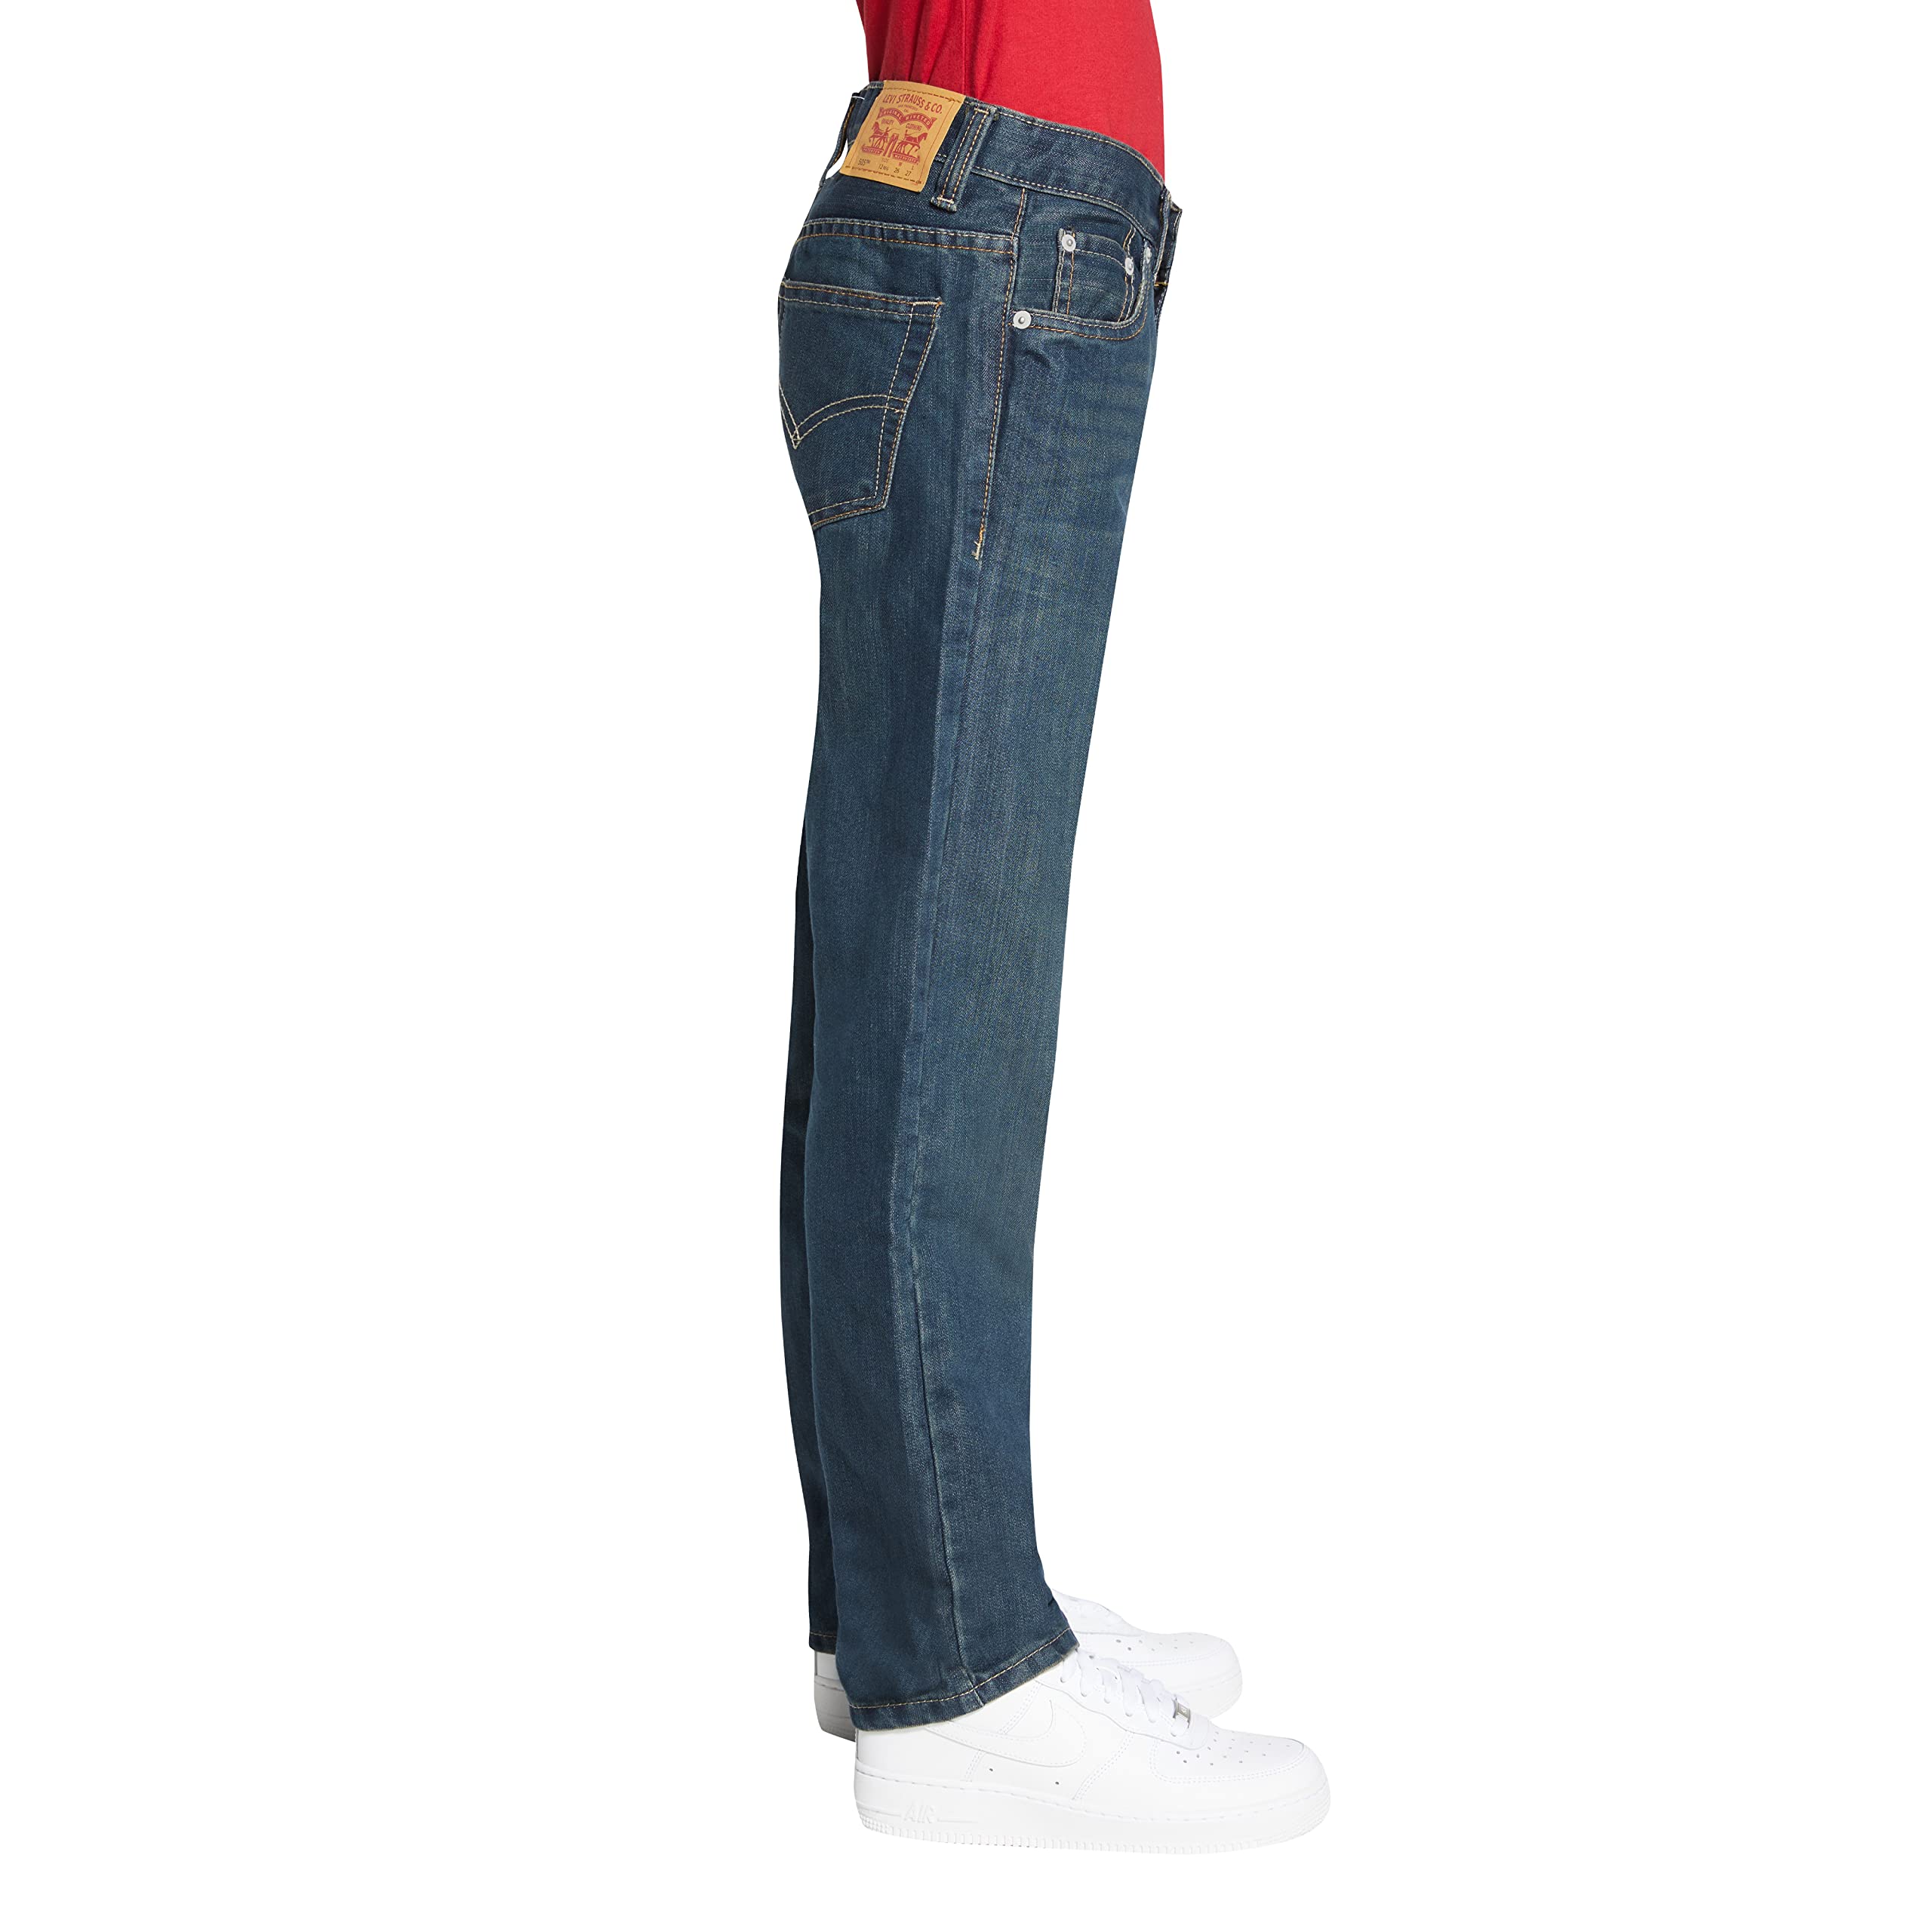 Levi's Boys' 505 Regular Fit Jeans